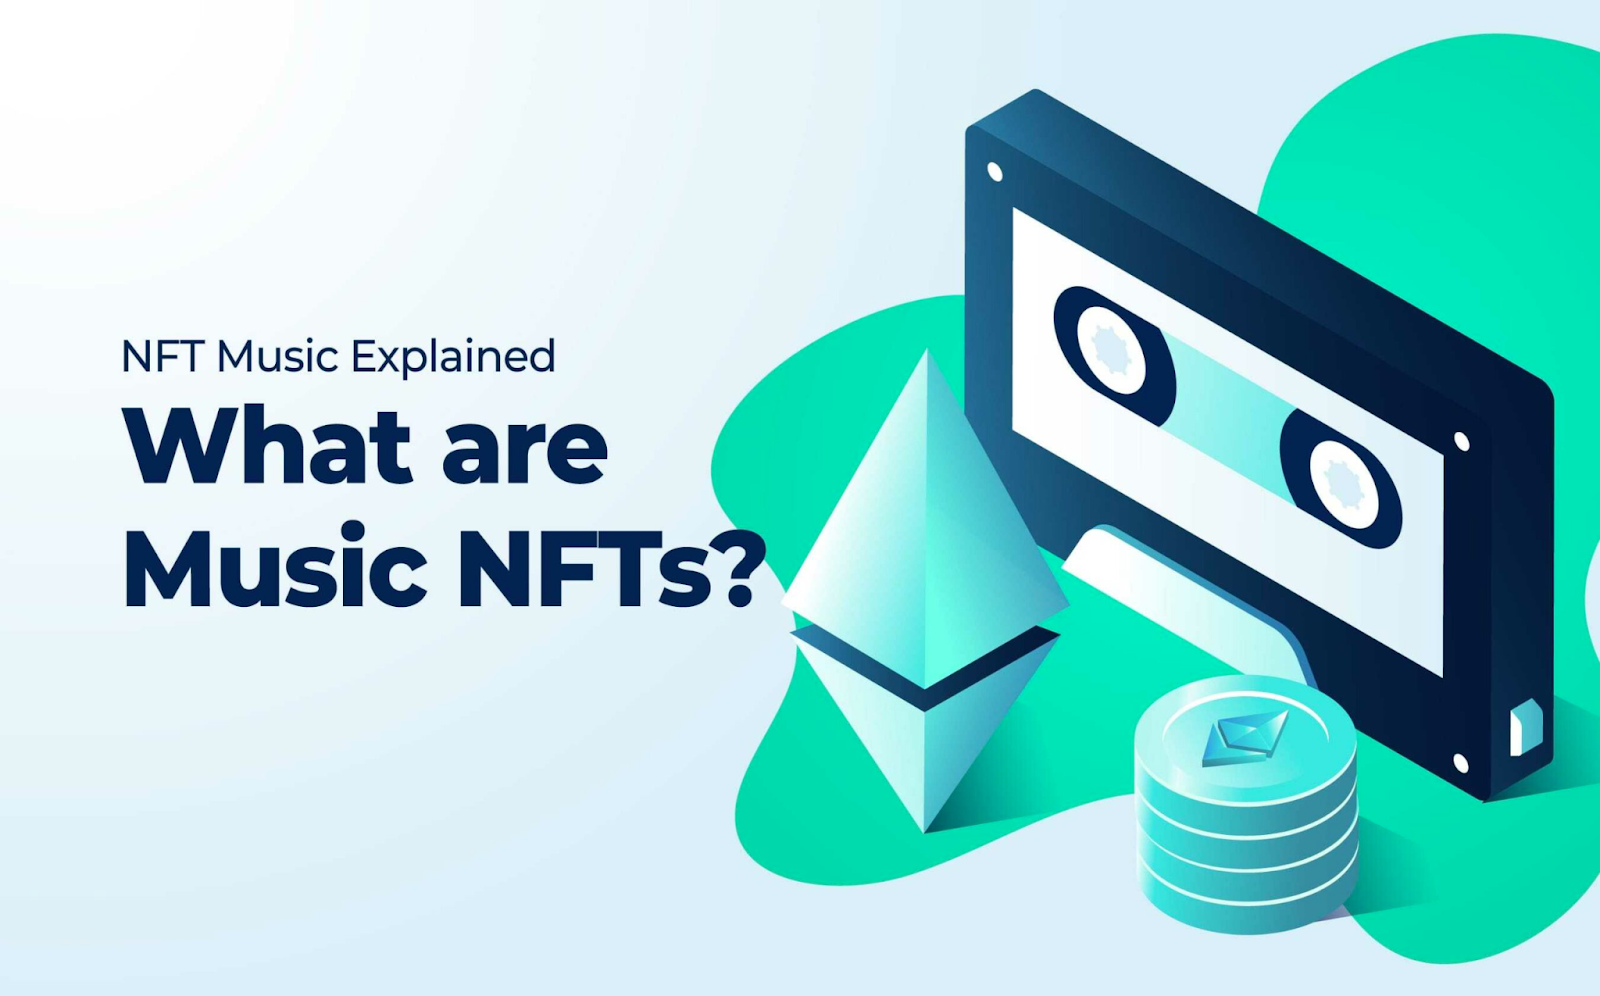 NFT music explained